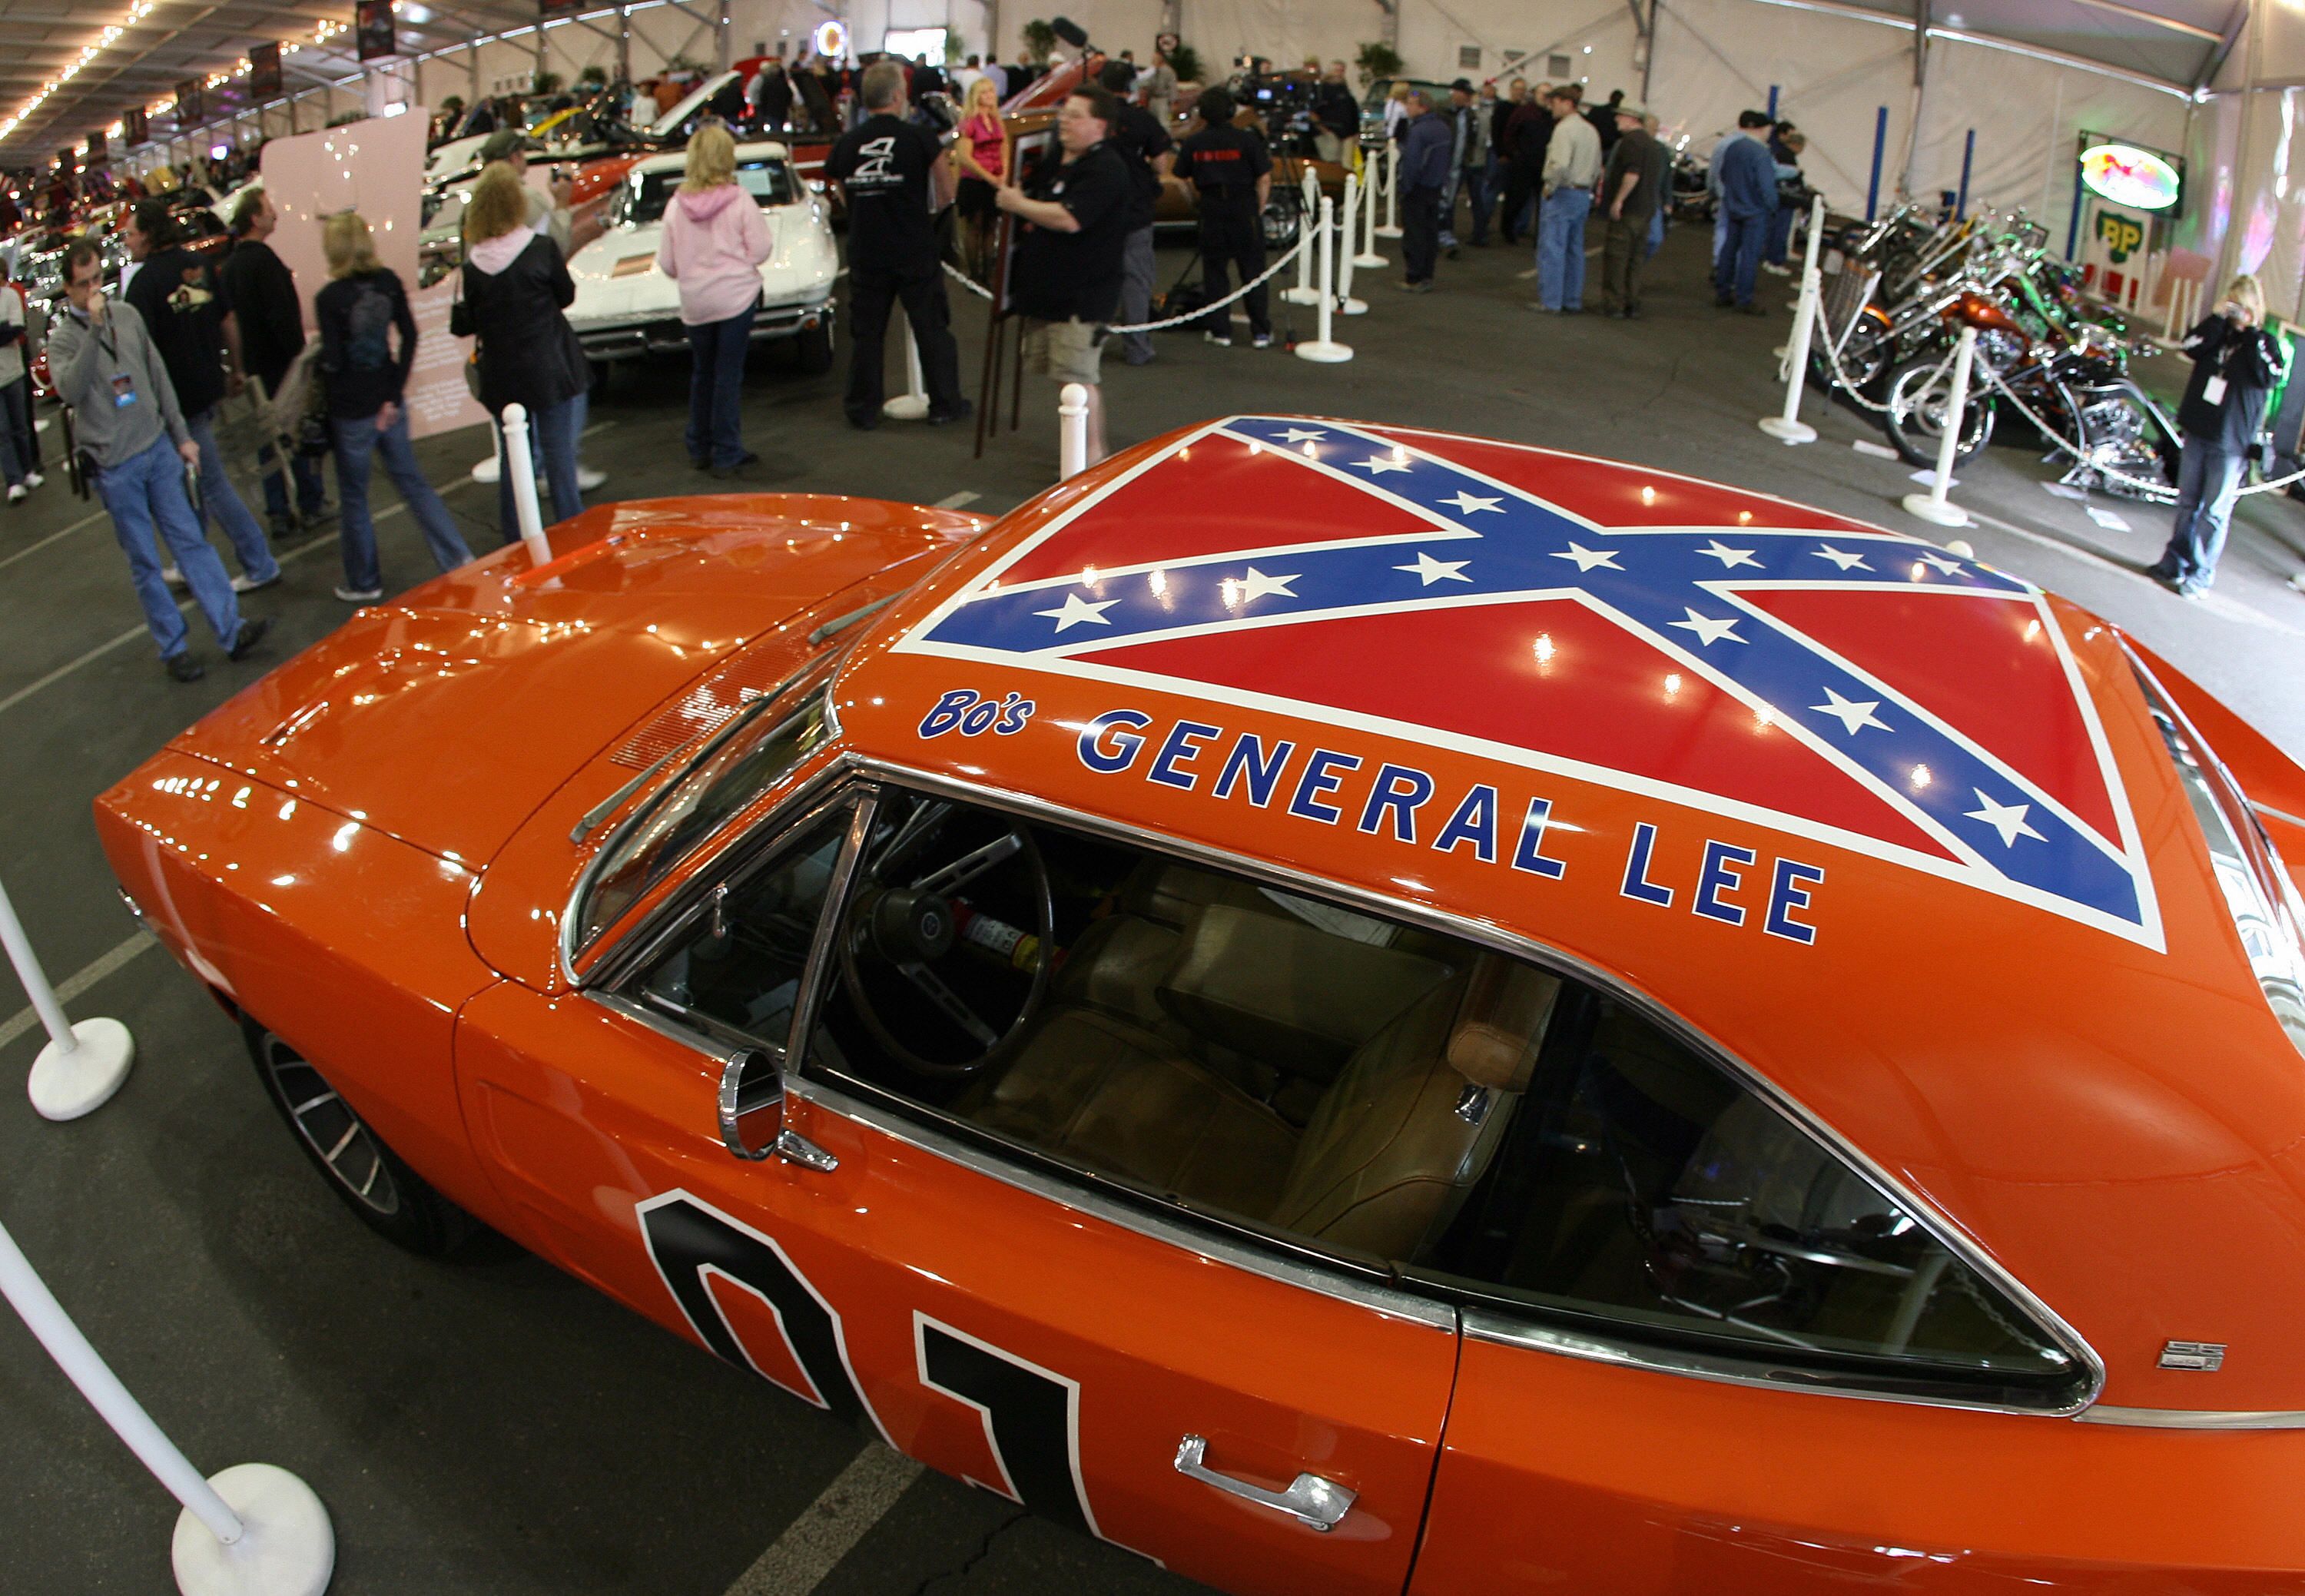 Dukes of Hazzard' General Lee car not moving, museum says | CNN